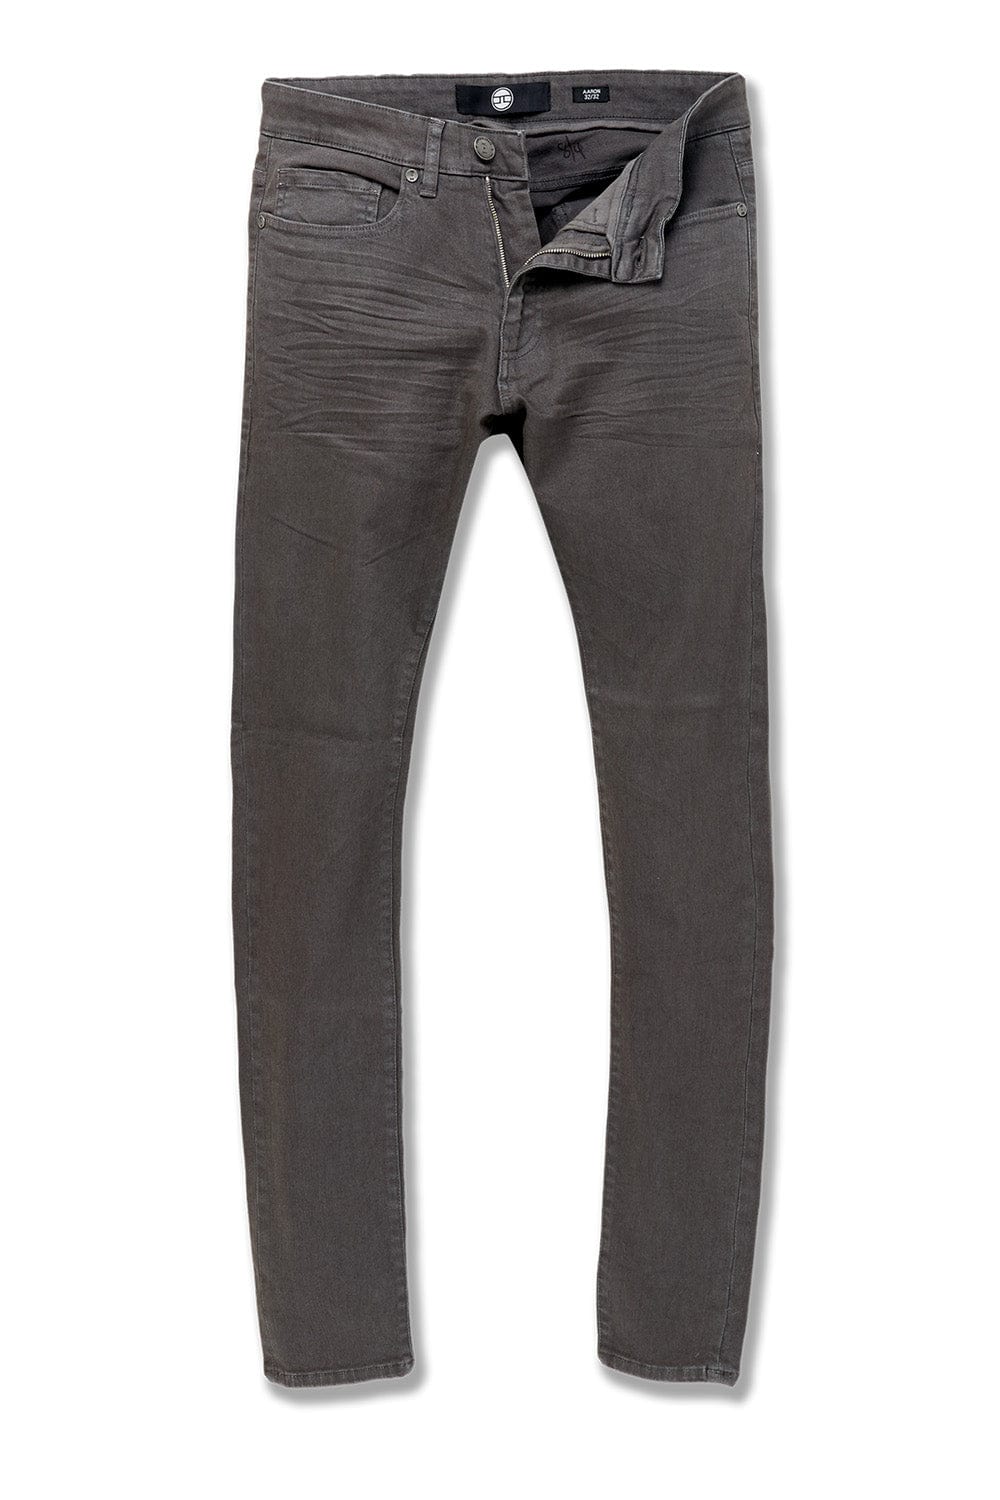 Jordan Craig Ross - Pure Tribeca Twill Pants (Charcoal) Charcoal / 28/32